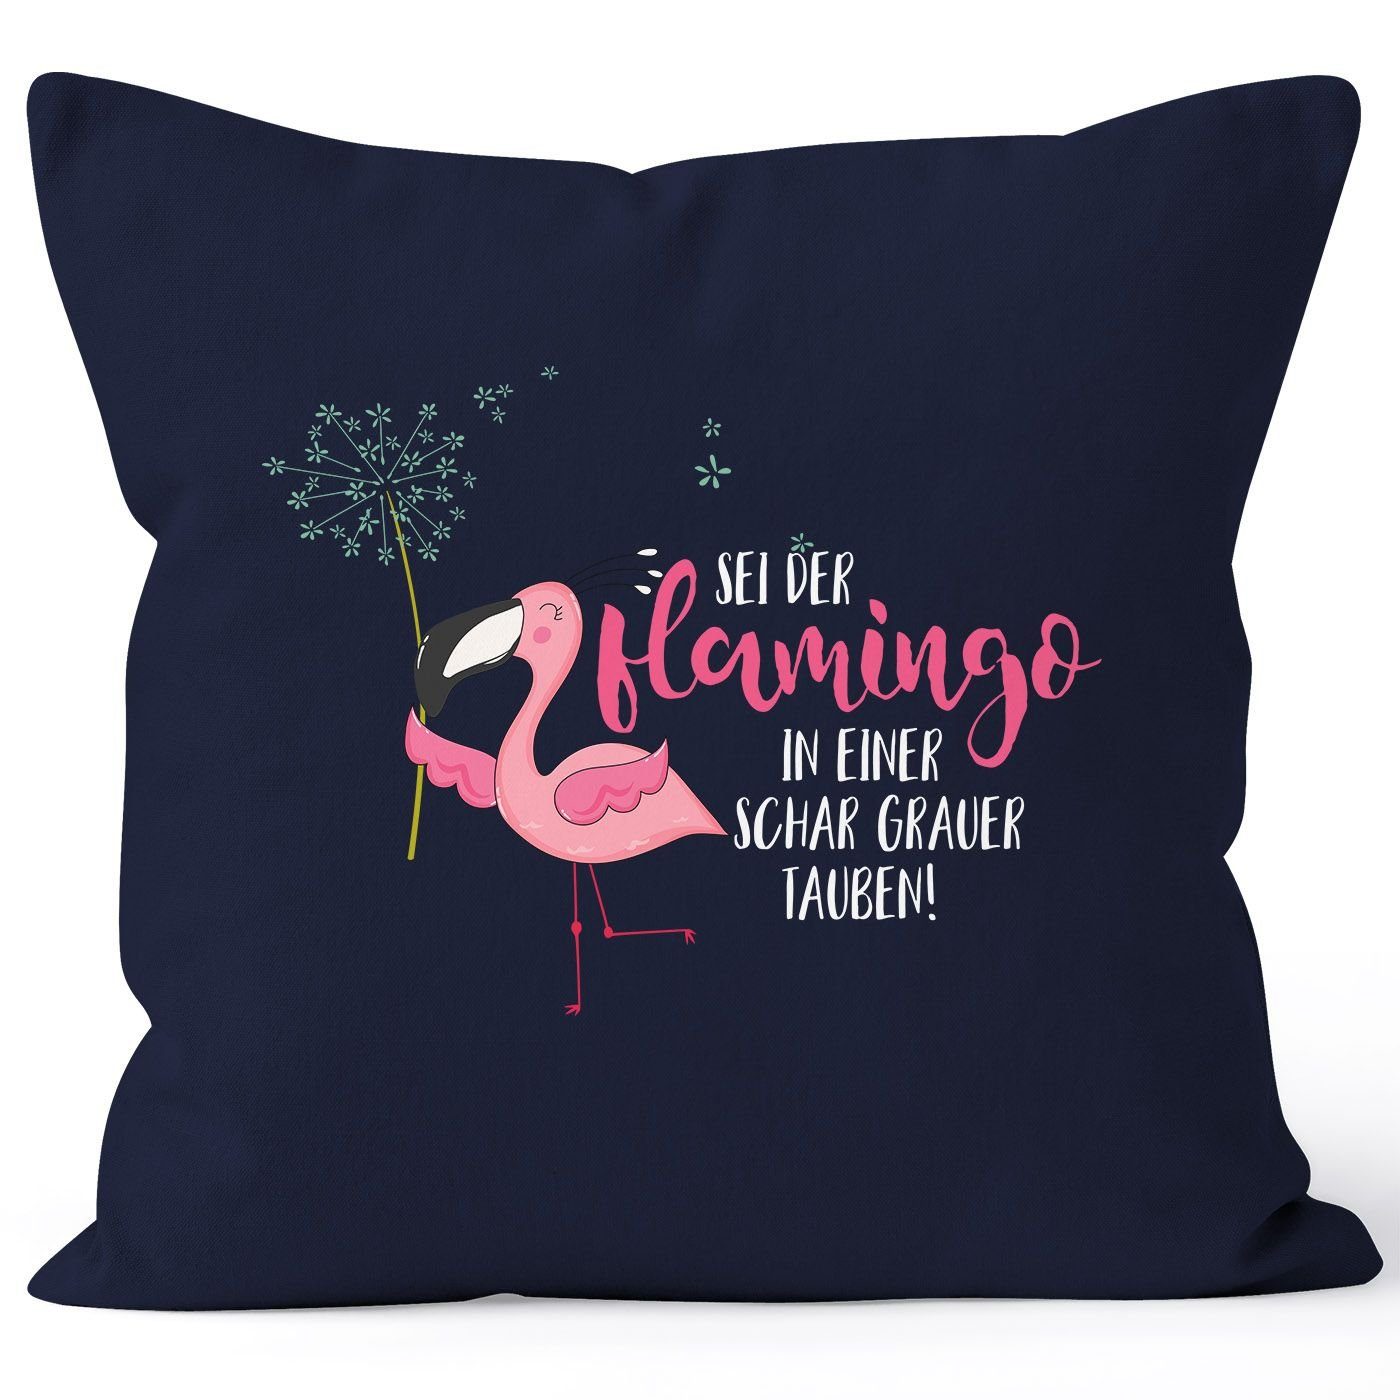 Schar 40x40 Tauben der Deko-Kissen navy Pusteblume Kissen-Hülle Baumwolle Flamingo Flamingo MoonWorks® Kissenbezug einer sei in MoonWorks Dekokissen grauer